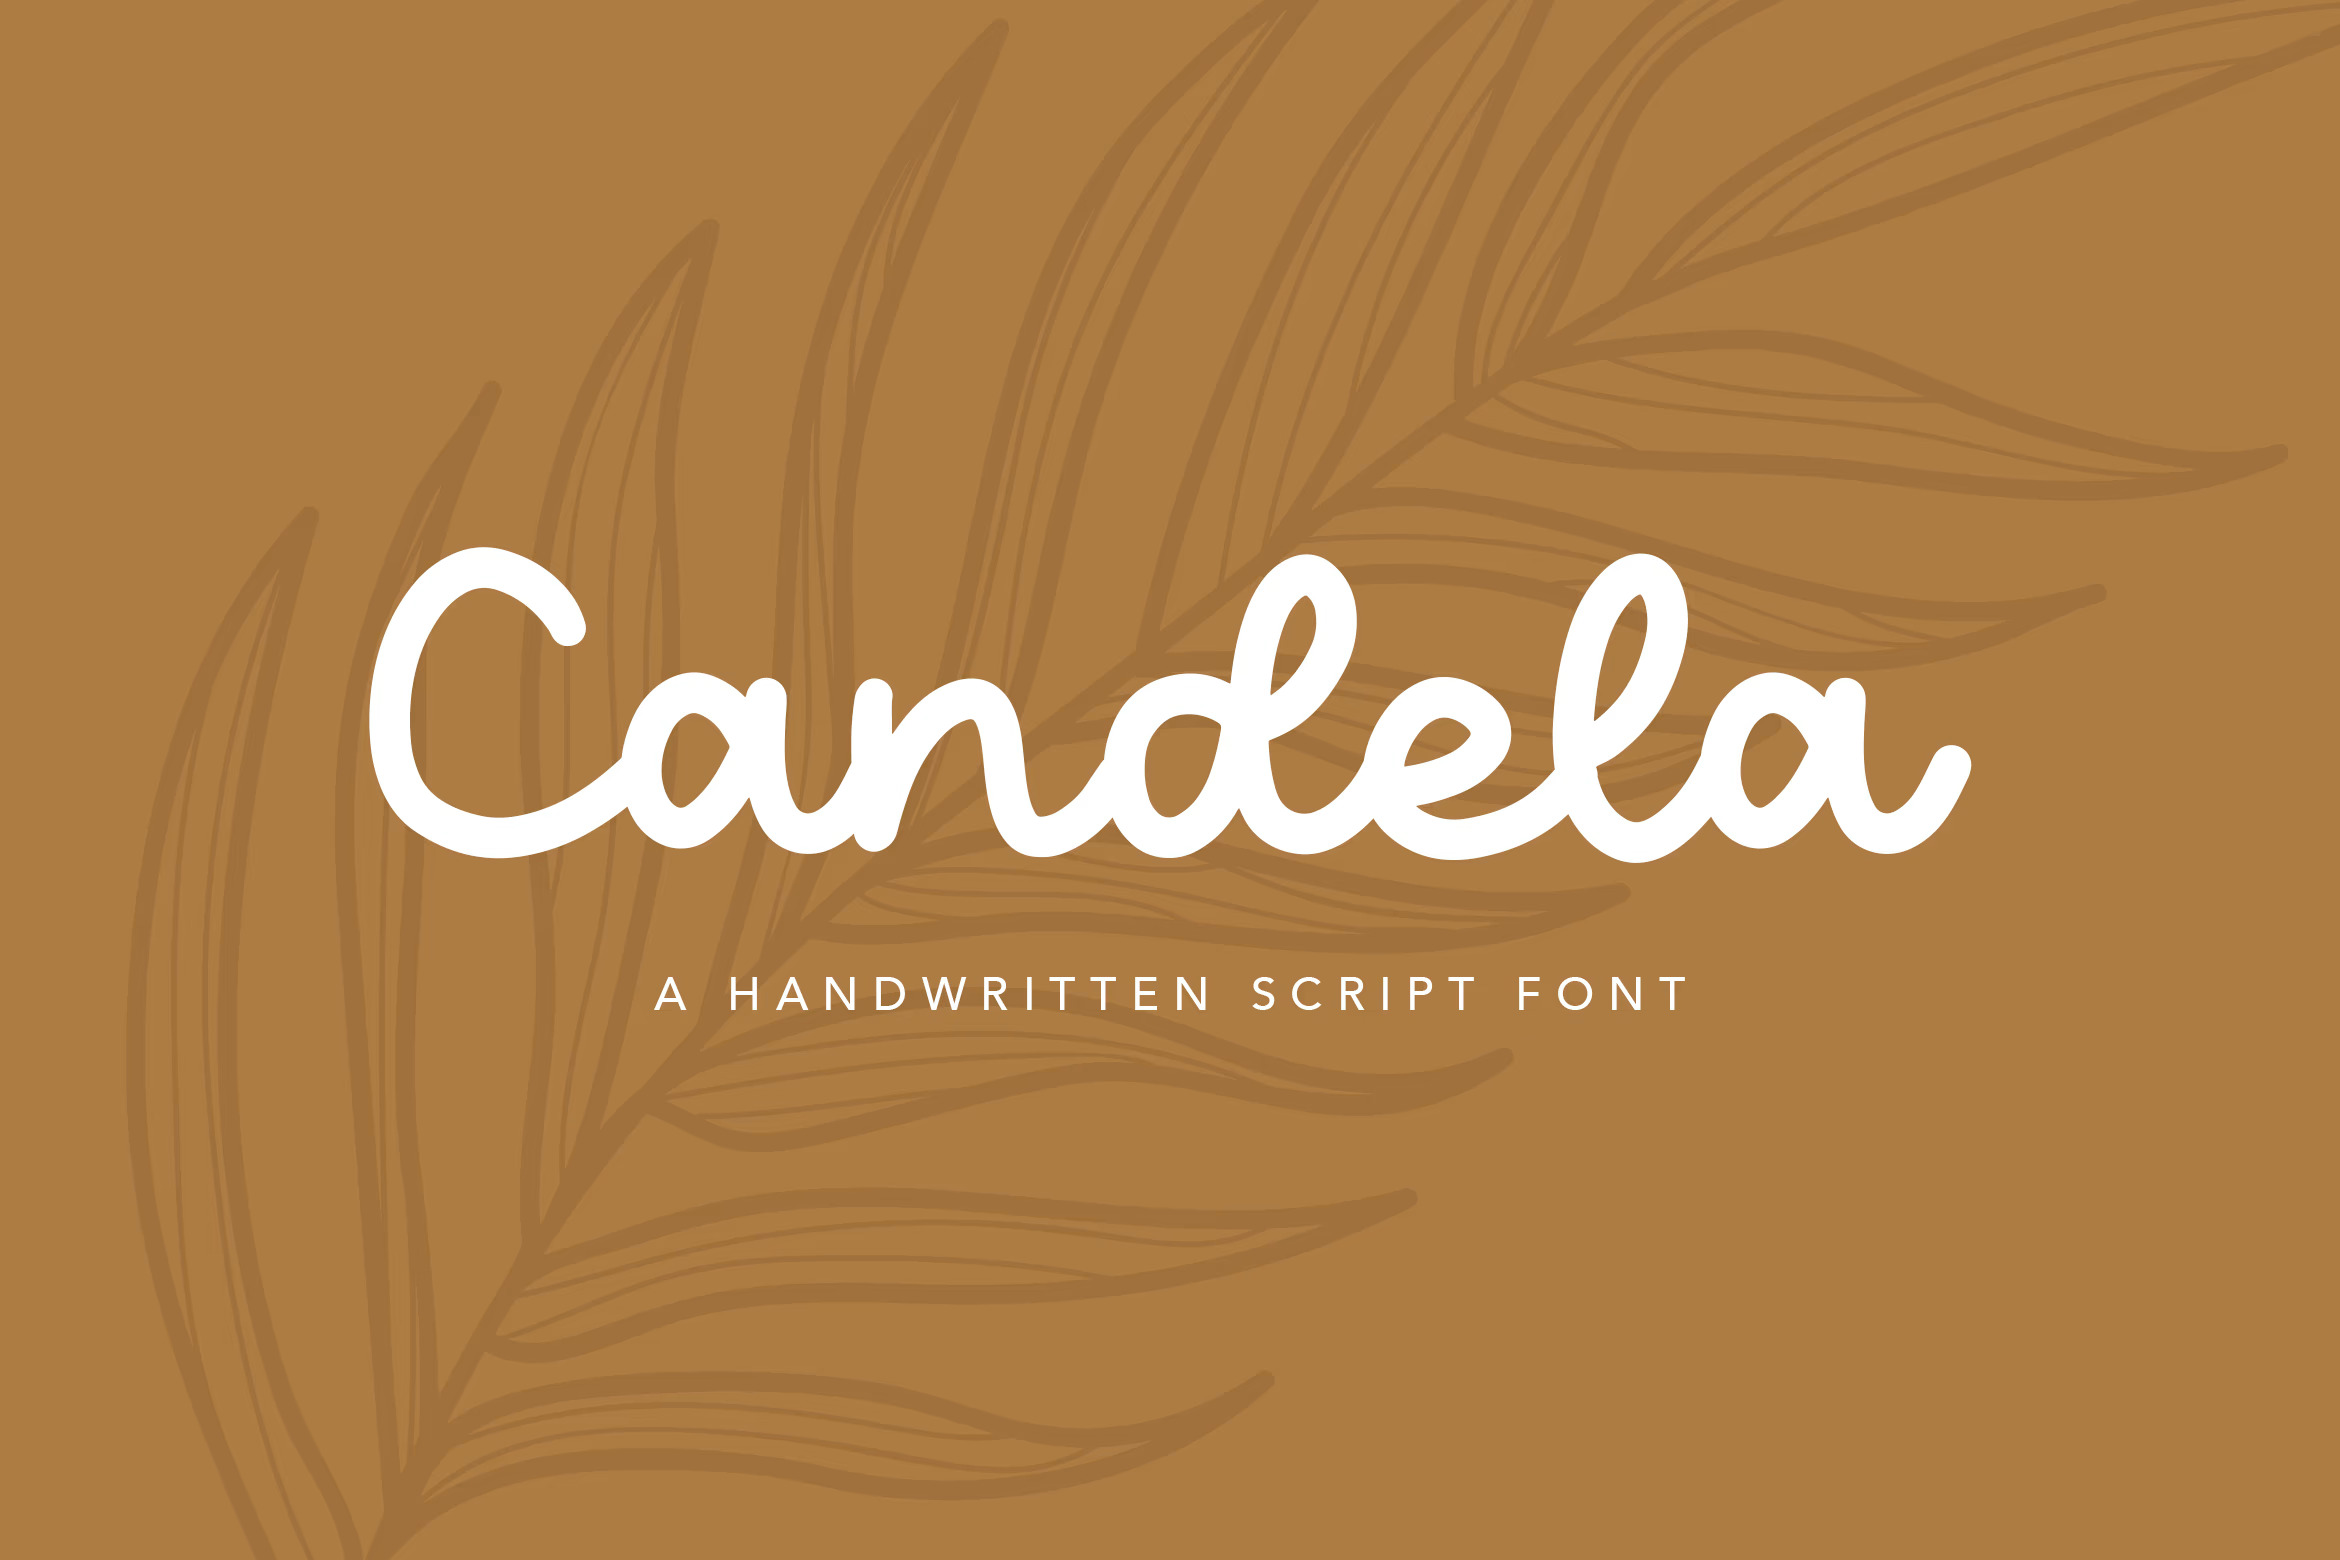 Candela is a nice warm font.